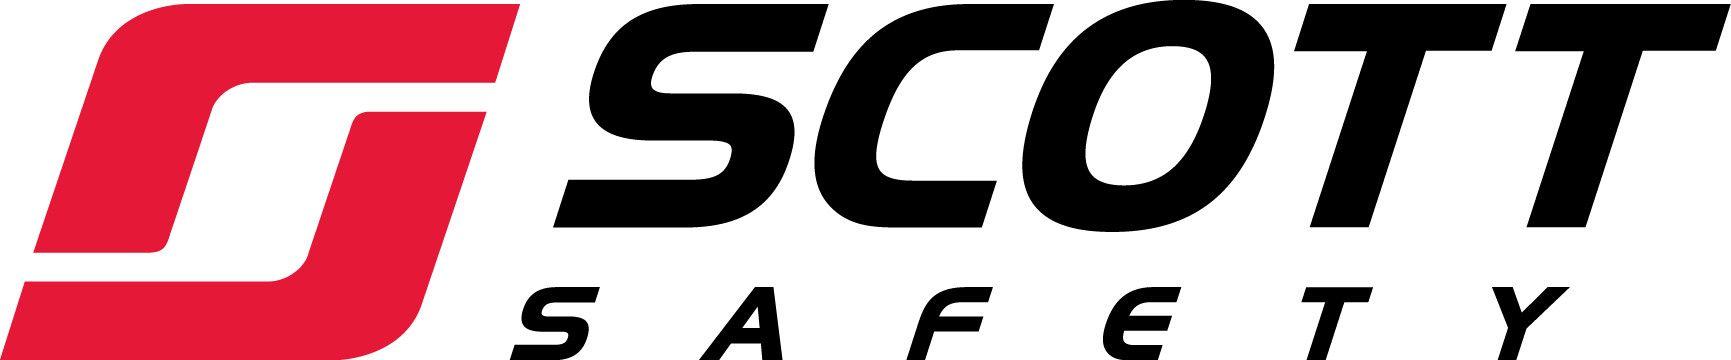 Air Safety Logo - Scott Safety Archives - MMFSS